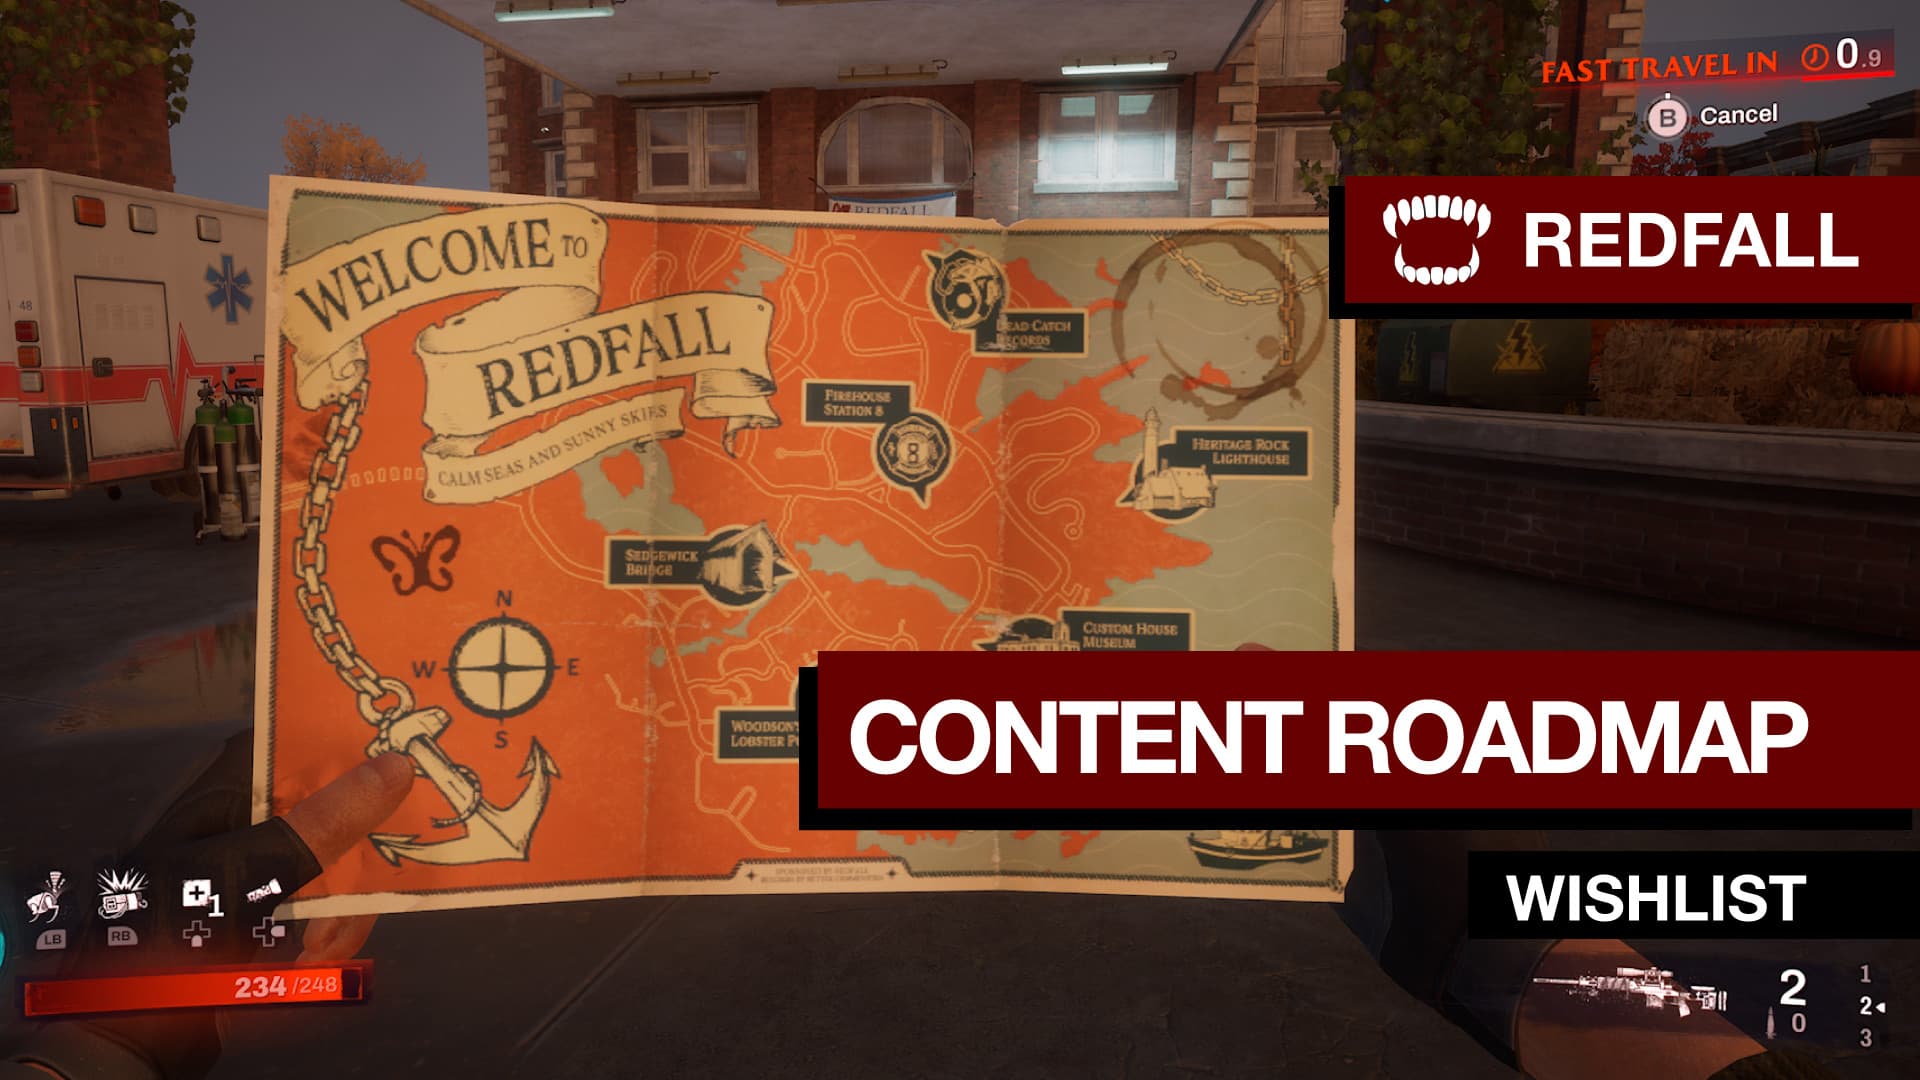 Redfall-content-roadmap-wishlist